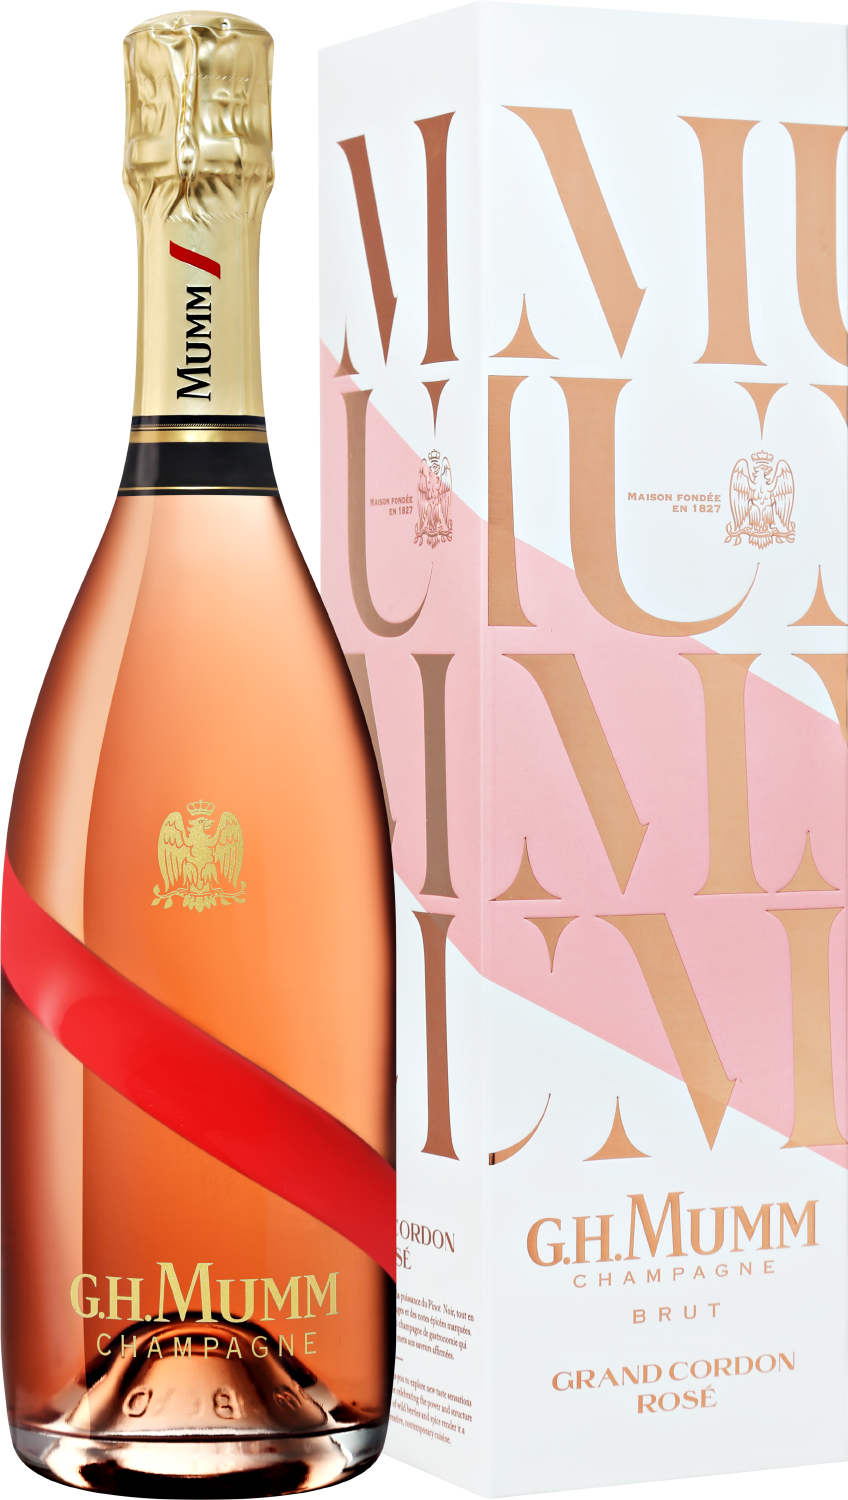 G.H. Mumm Grand Cordon Rose Champagne AOC Brut (gift box) lallier grand rose brut grand cru champagne aoc gift box